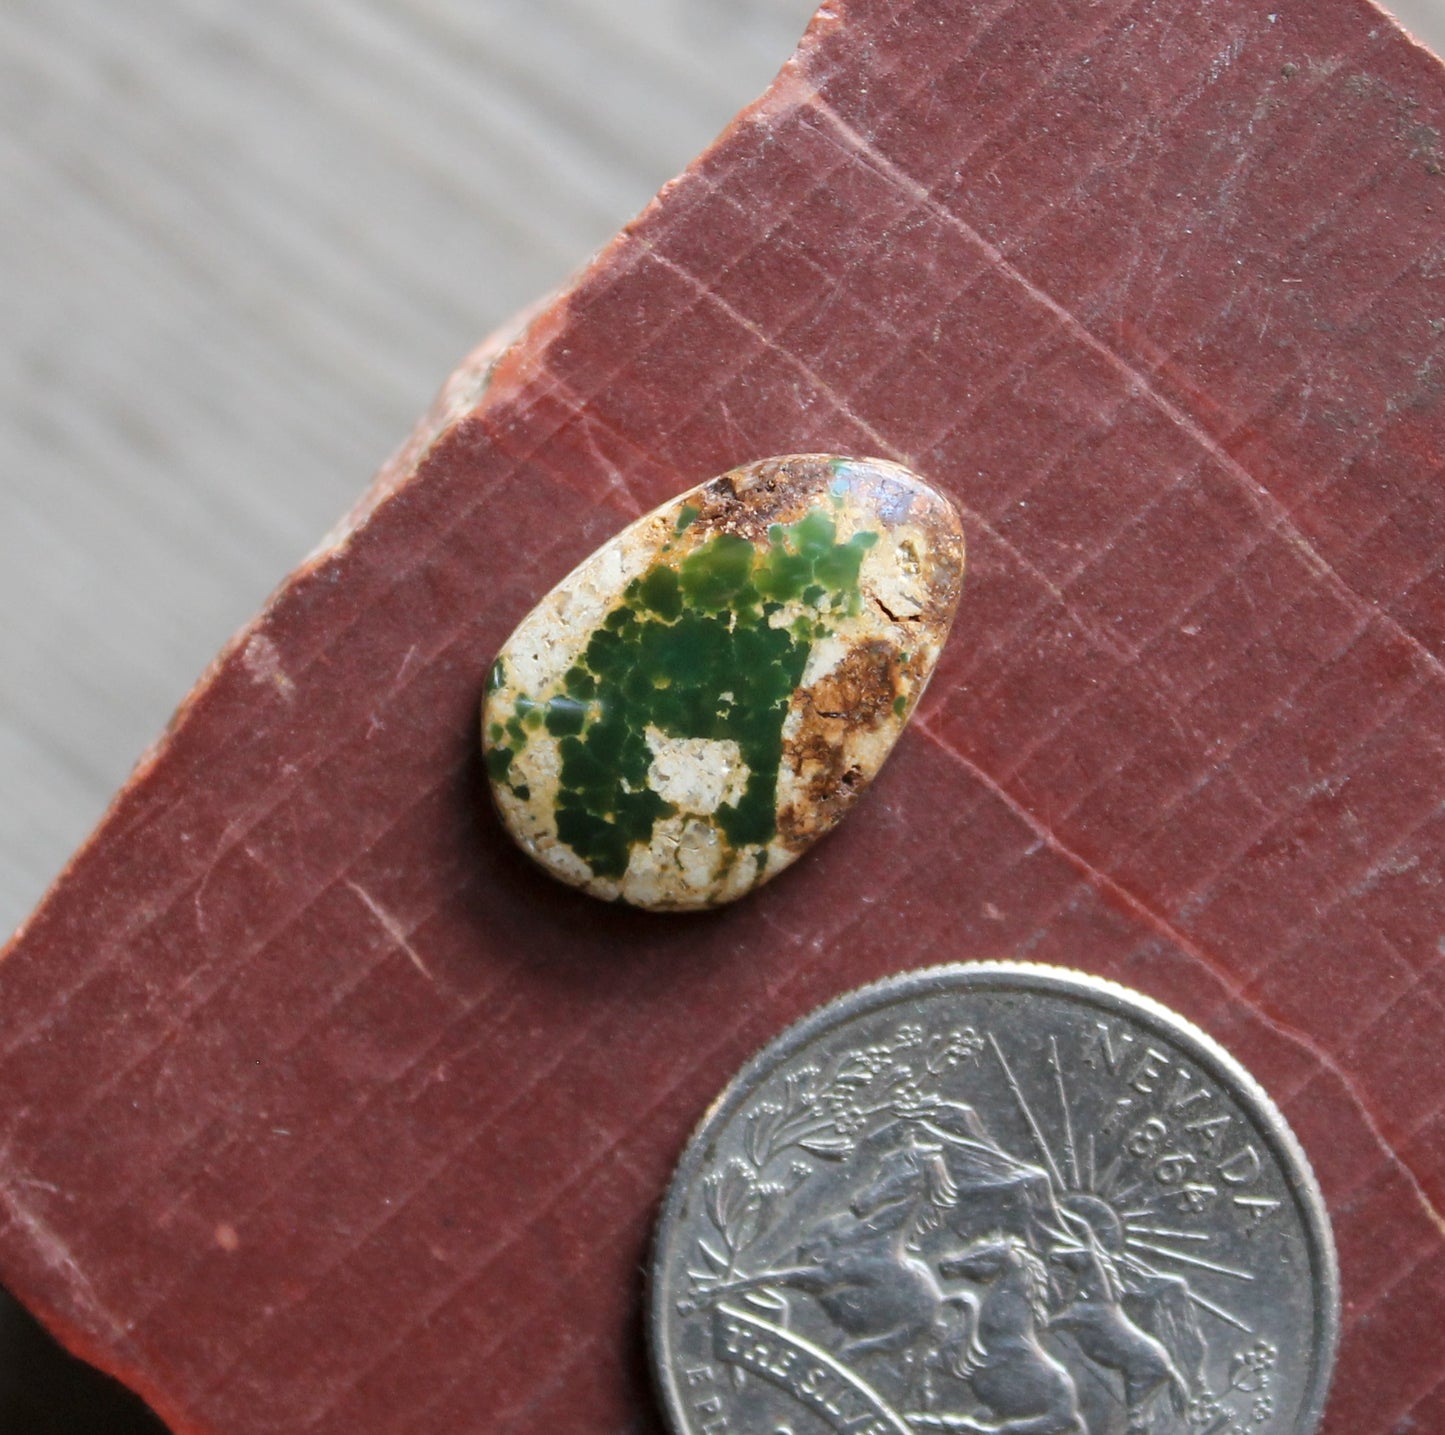 6 carat green boulder-cut Stone Mountain Turquoise cabochon